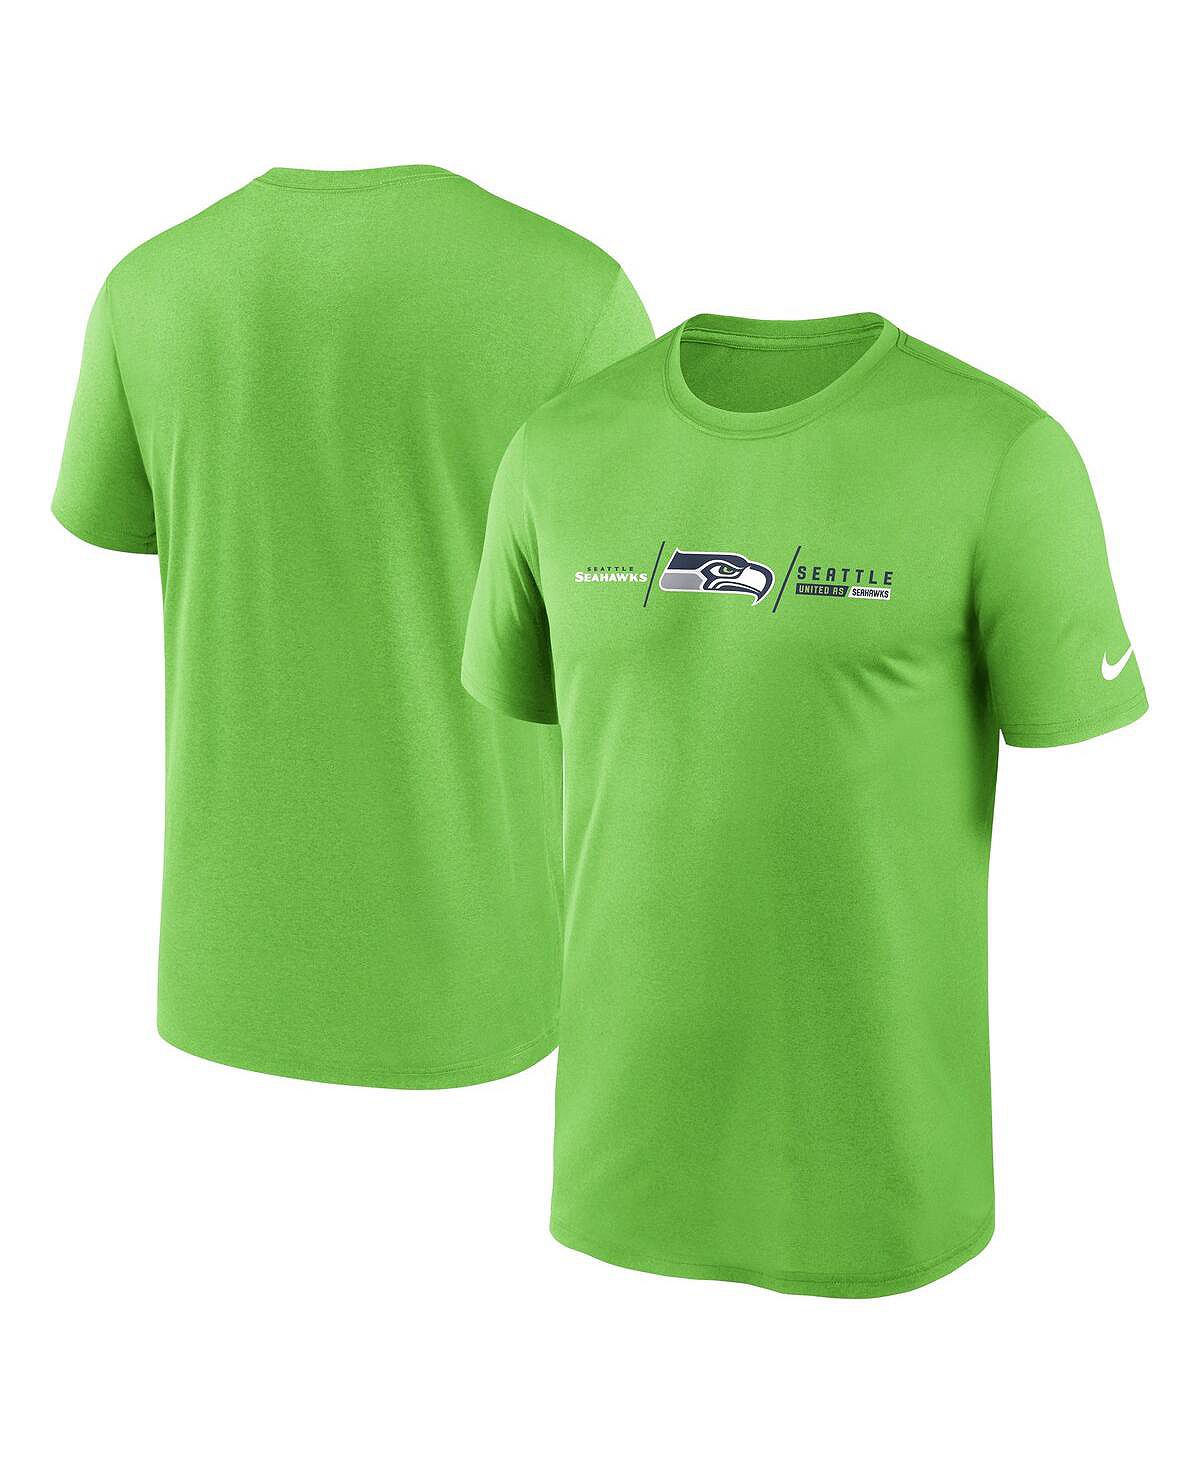 Мужская неоново-зеленая футболка seattle seahawks horizontal lockup legend Nike, мульти платье megapolis сиэтл